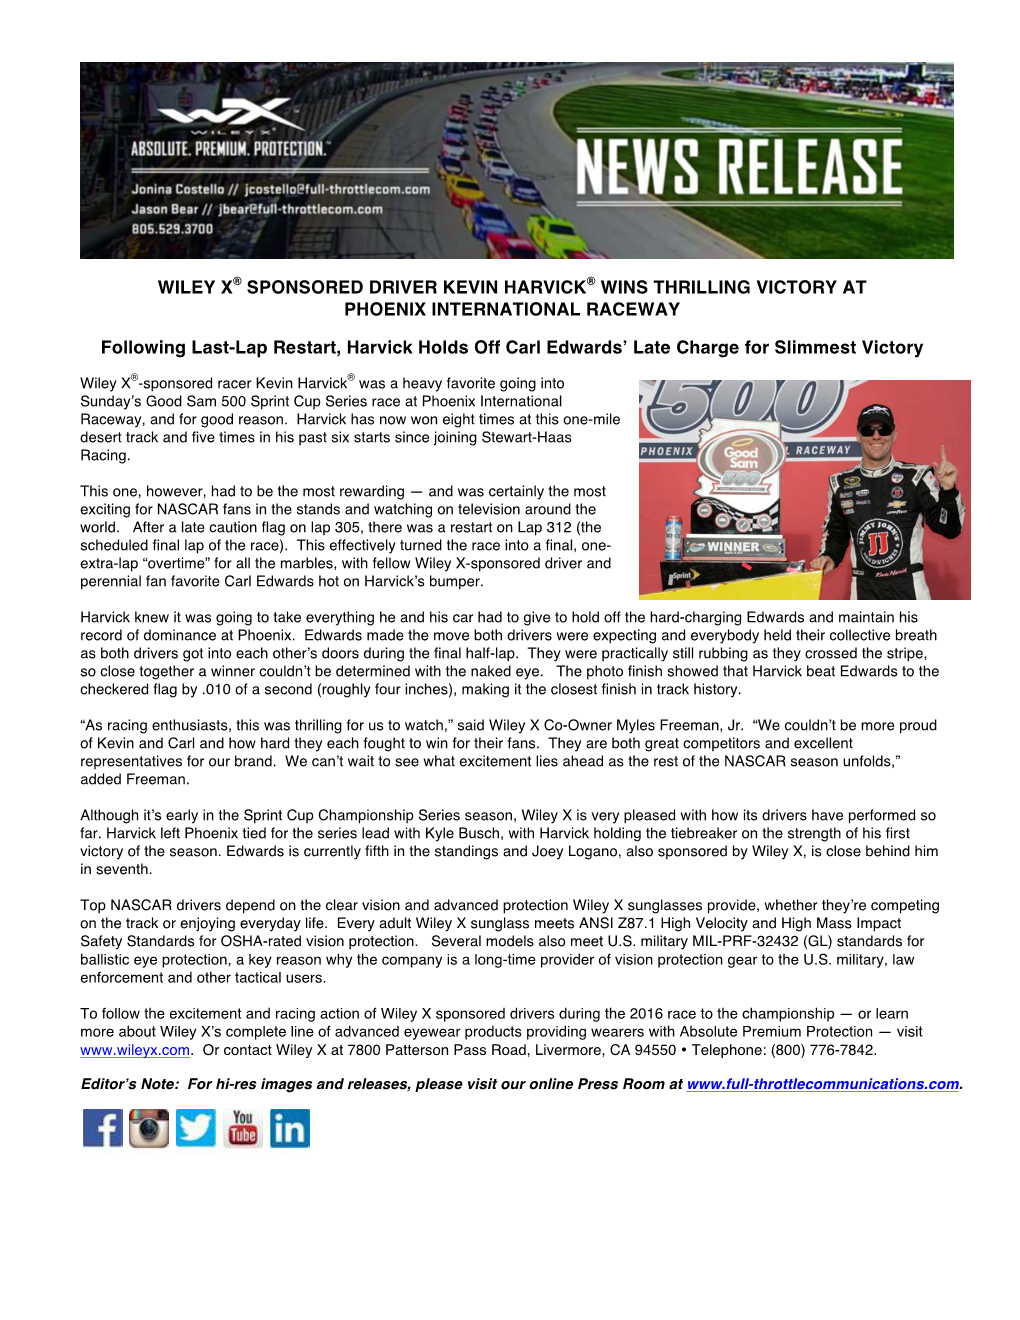 Kevin Harvick® Wins Thrilling Victory at Phoenix International Raceway